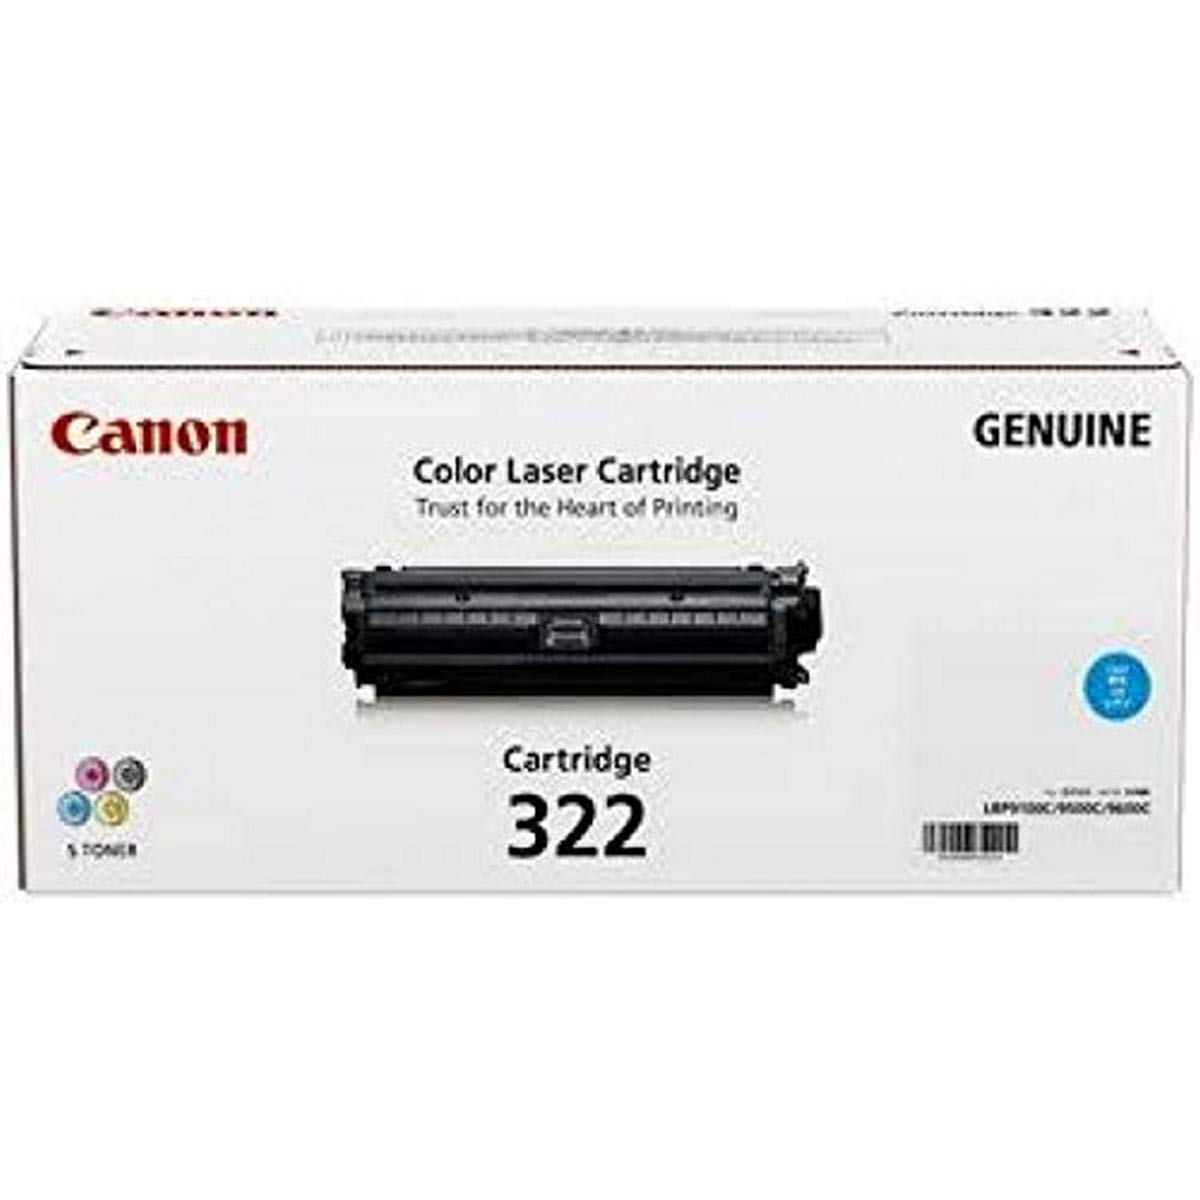 Canon CRG-322 Toner Cartridge